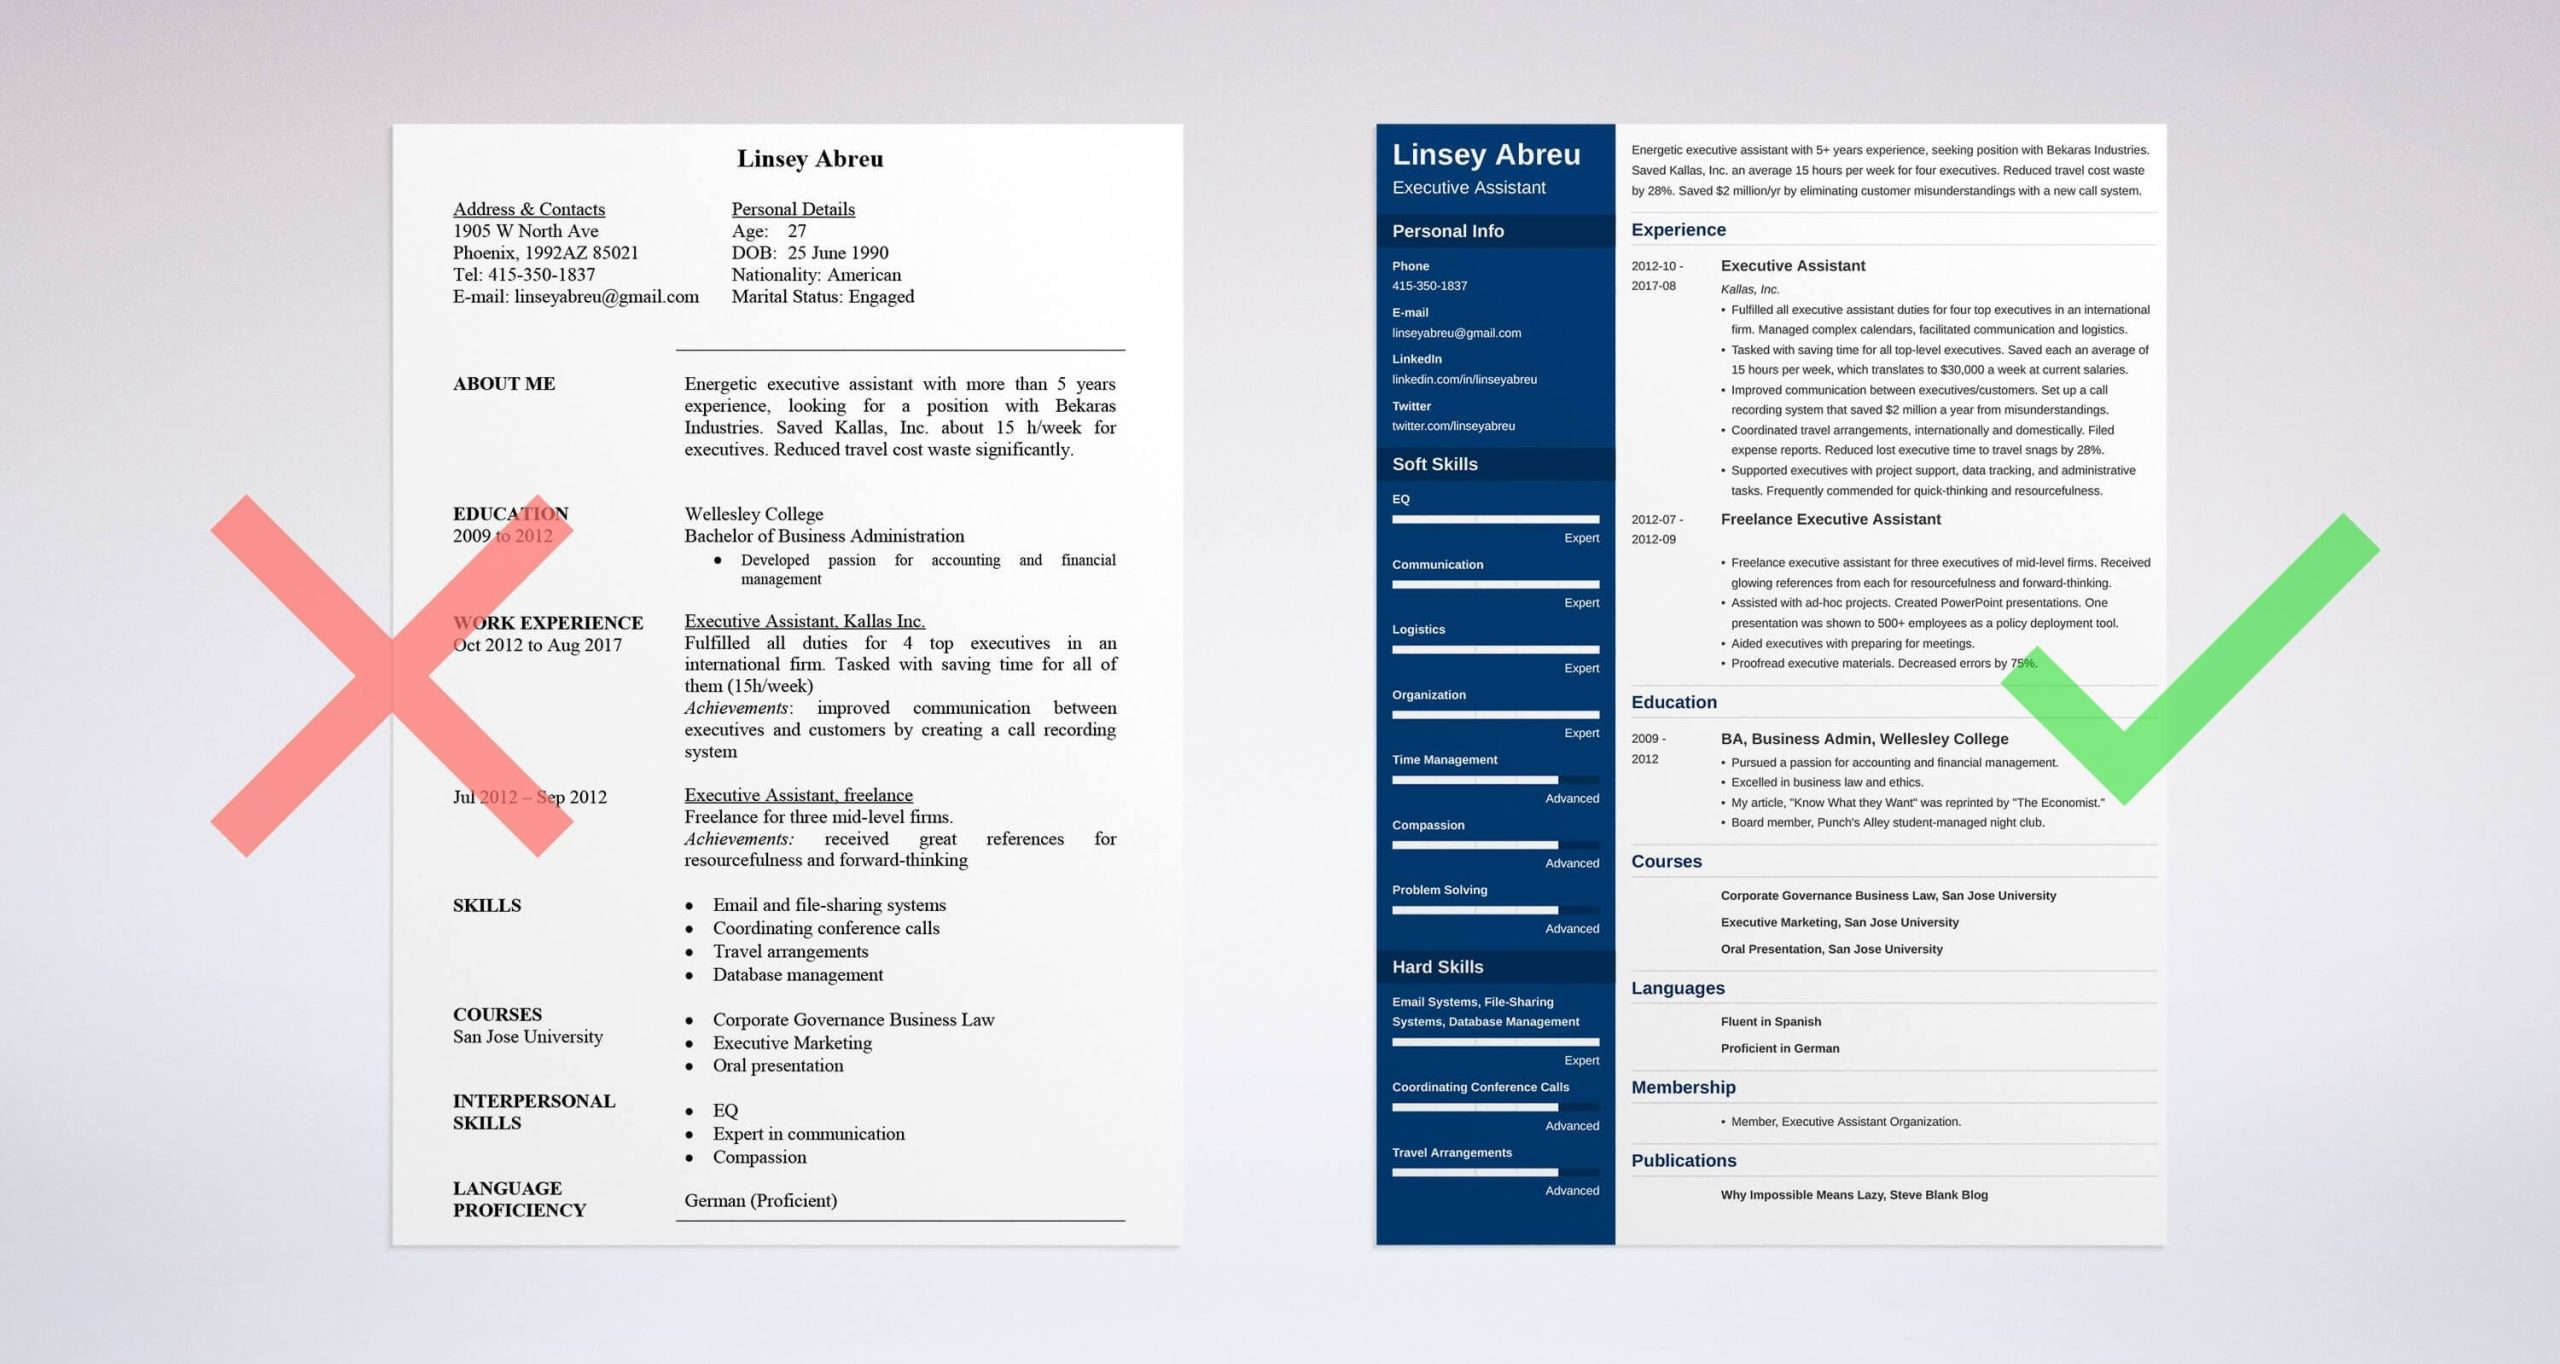 Senior Executive Secretary Resume Sample Job Executive assistant Resume Sample [lancarrezekiqskills & Objective]